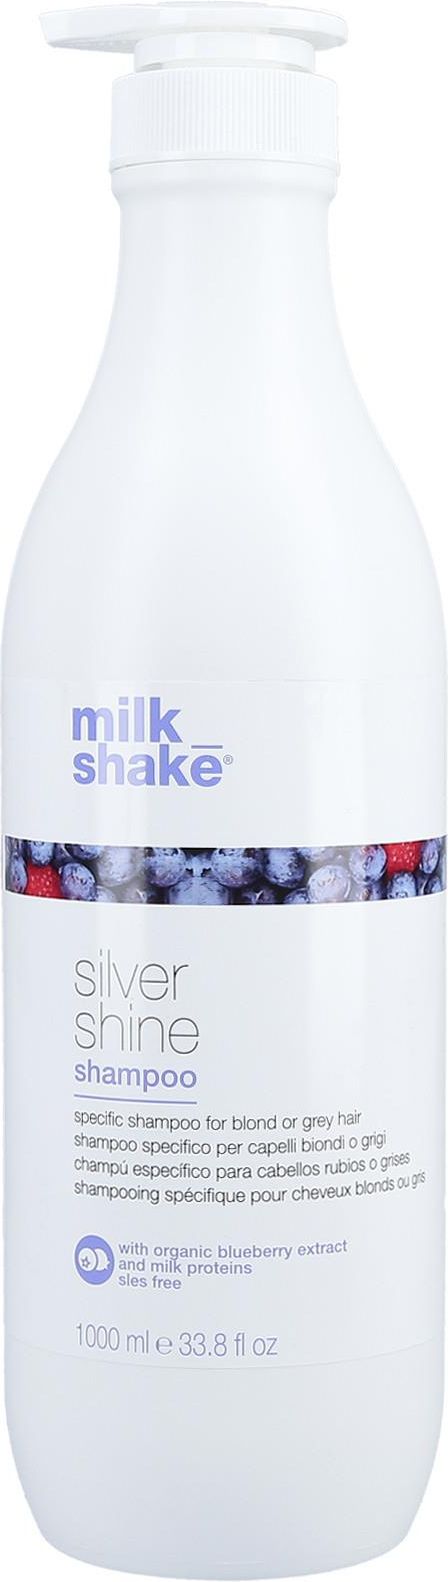 milk shake silver shine szampon ceneo